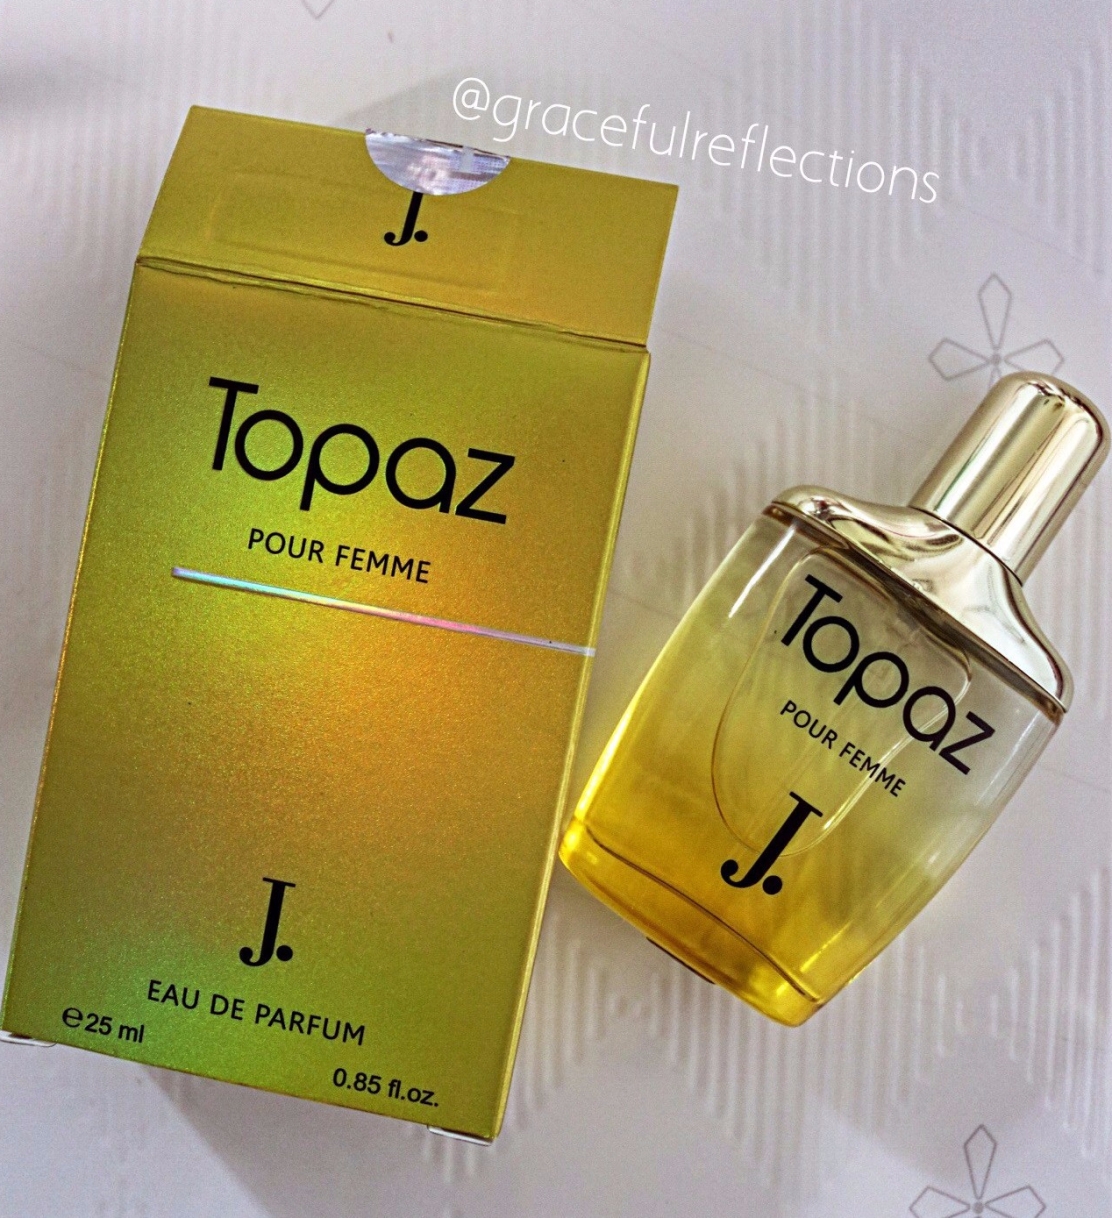 Topaz By J Fragrances Graceful Reflectionz